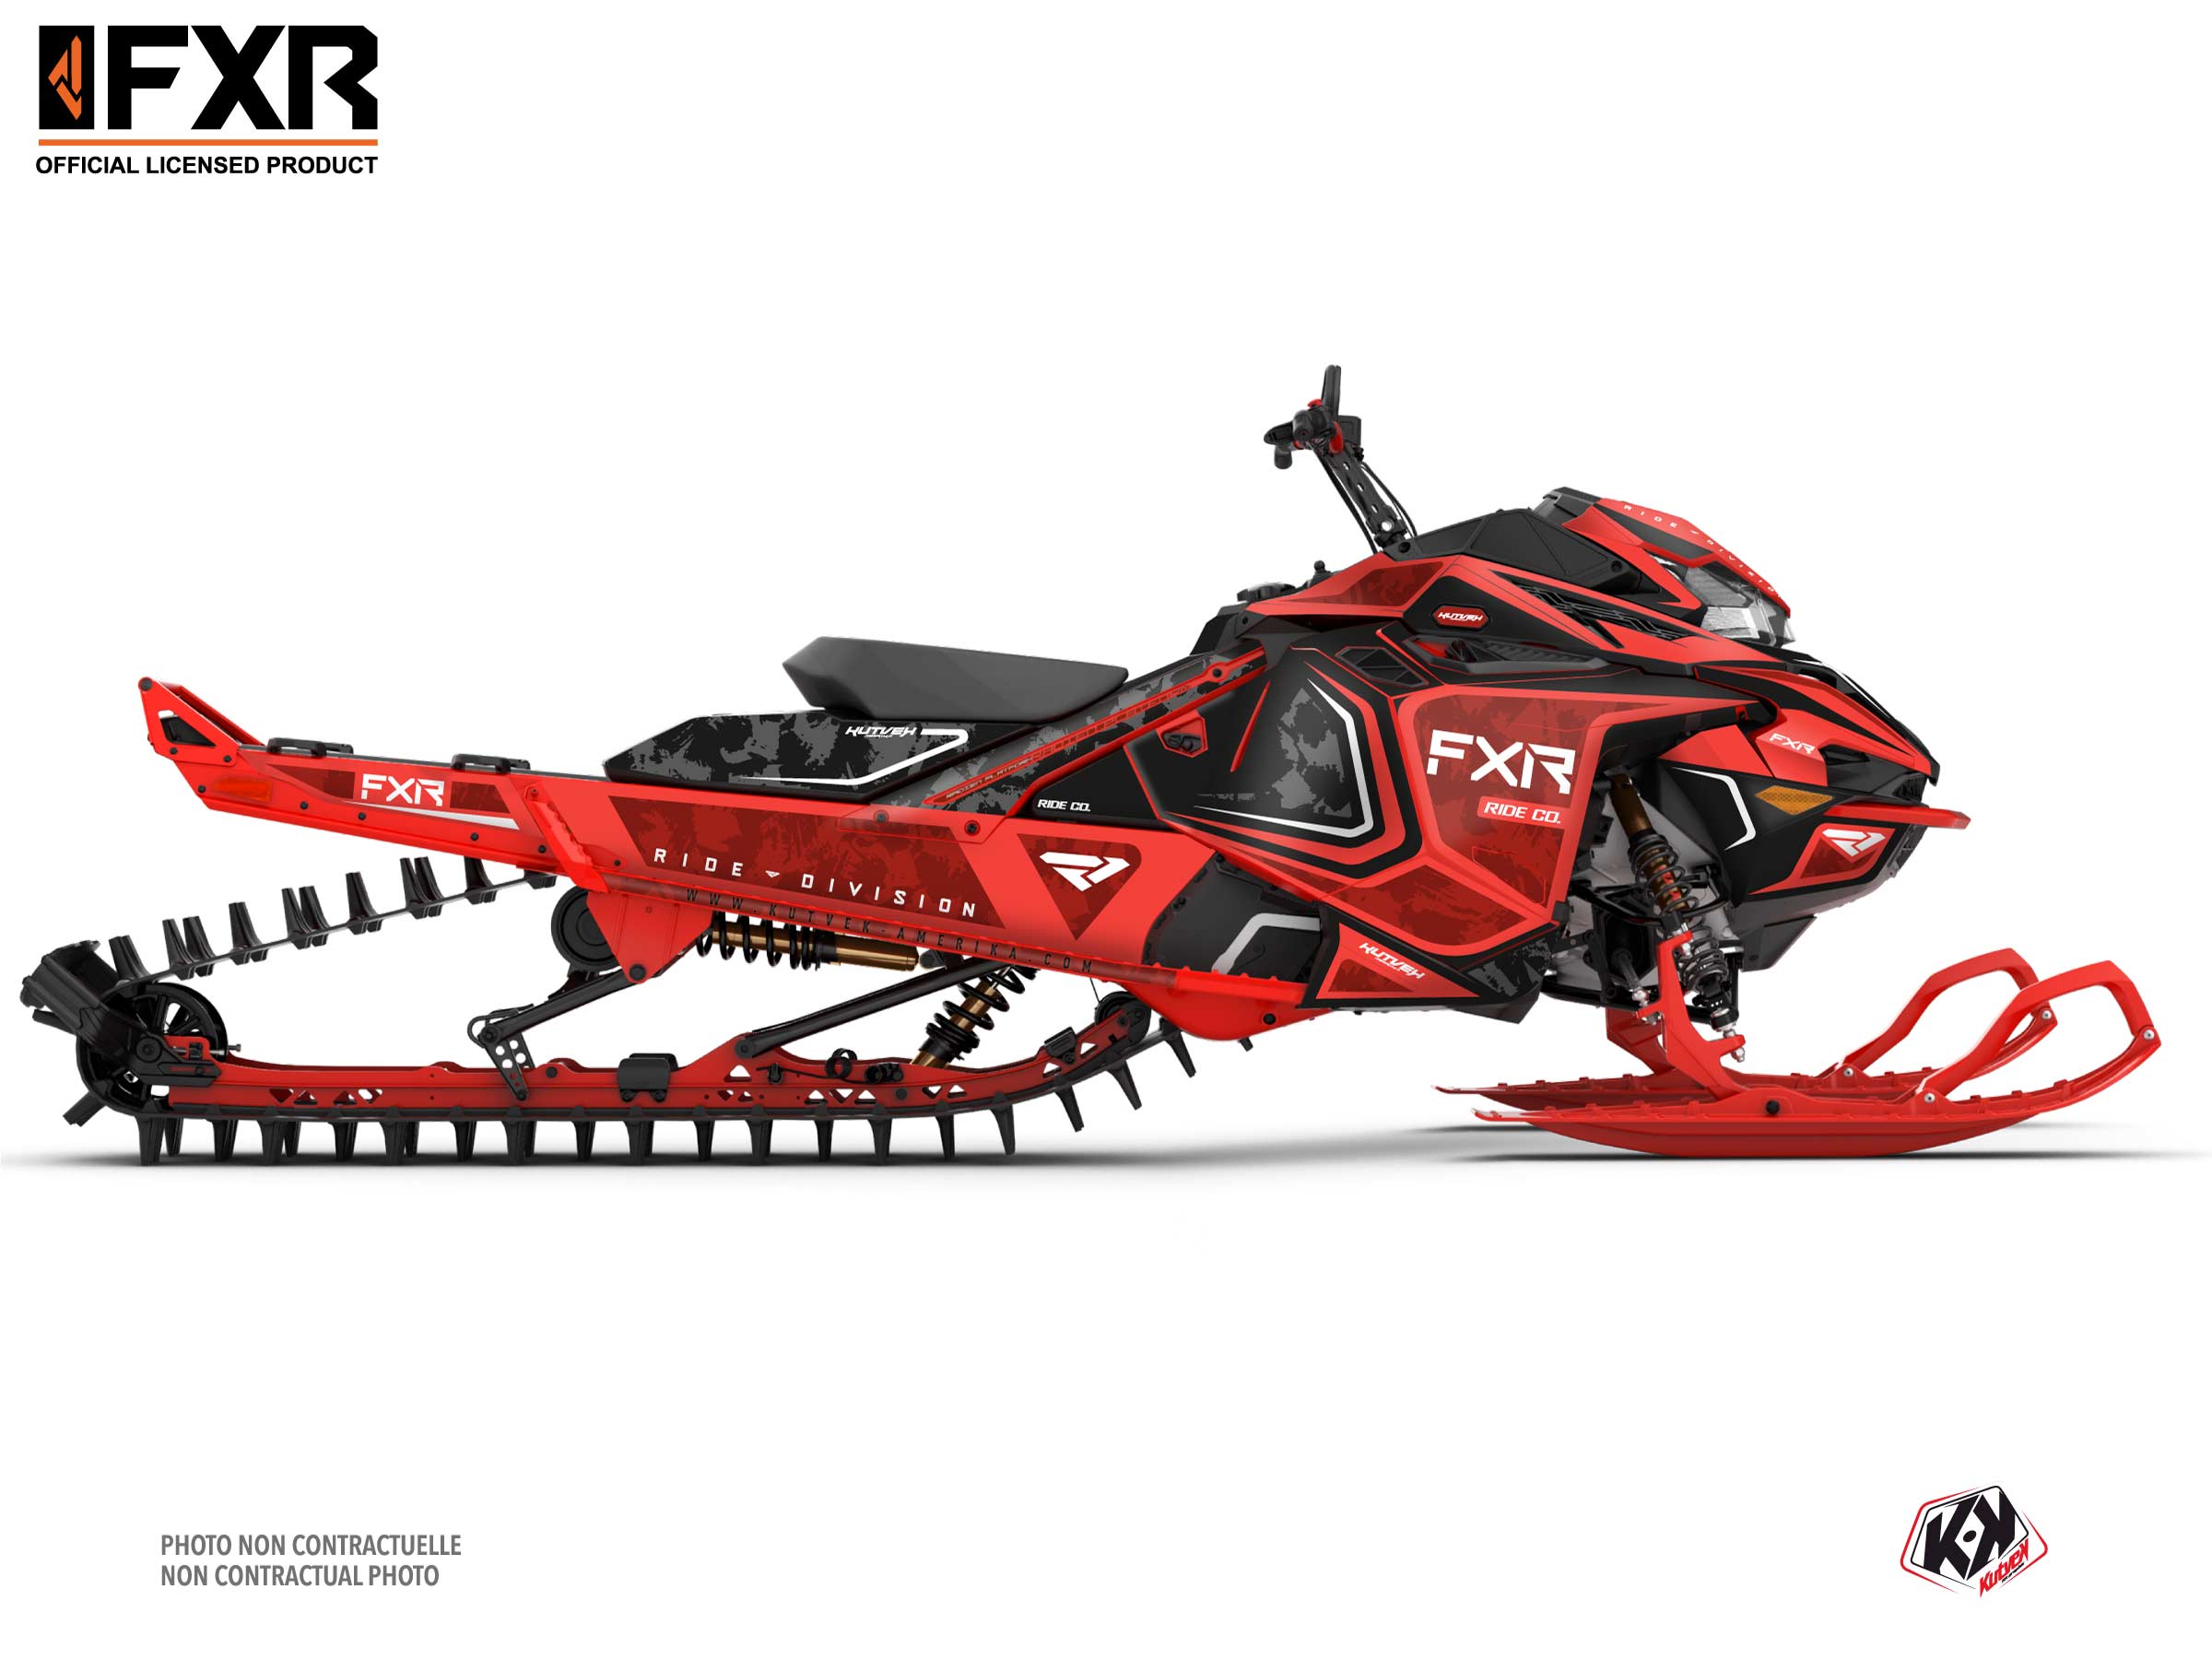 lynx snowmobile likens serie graphic kit